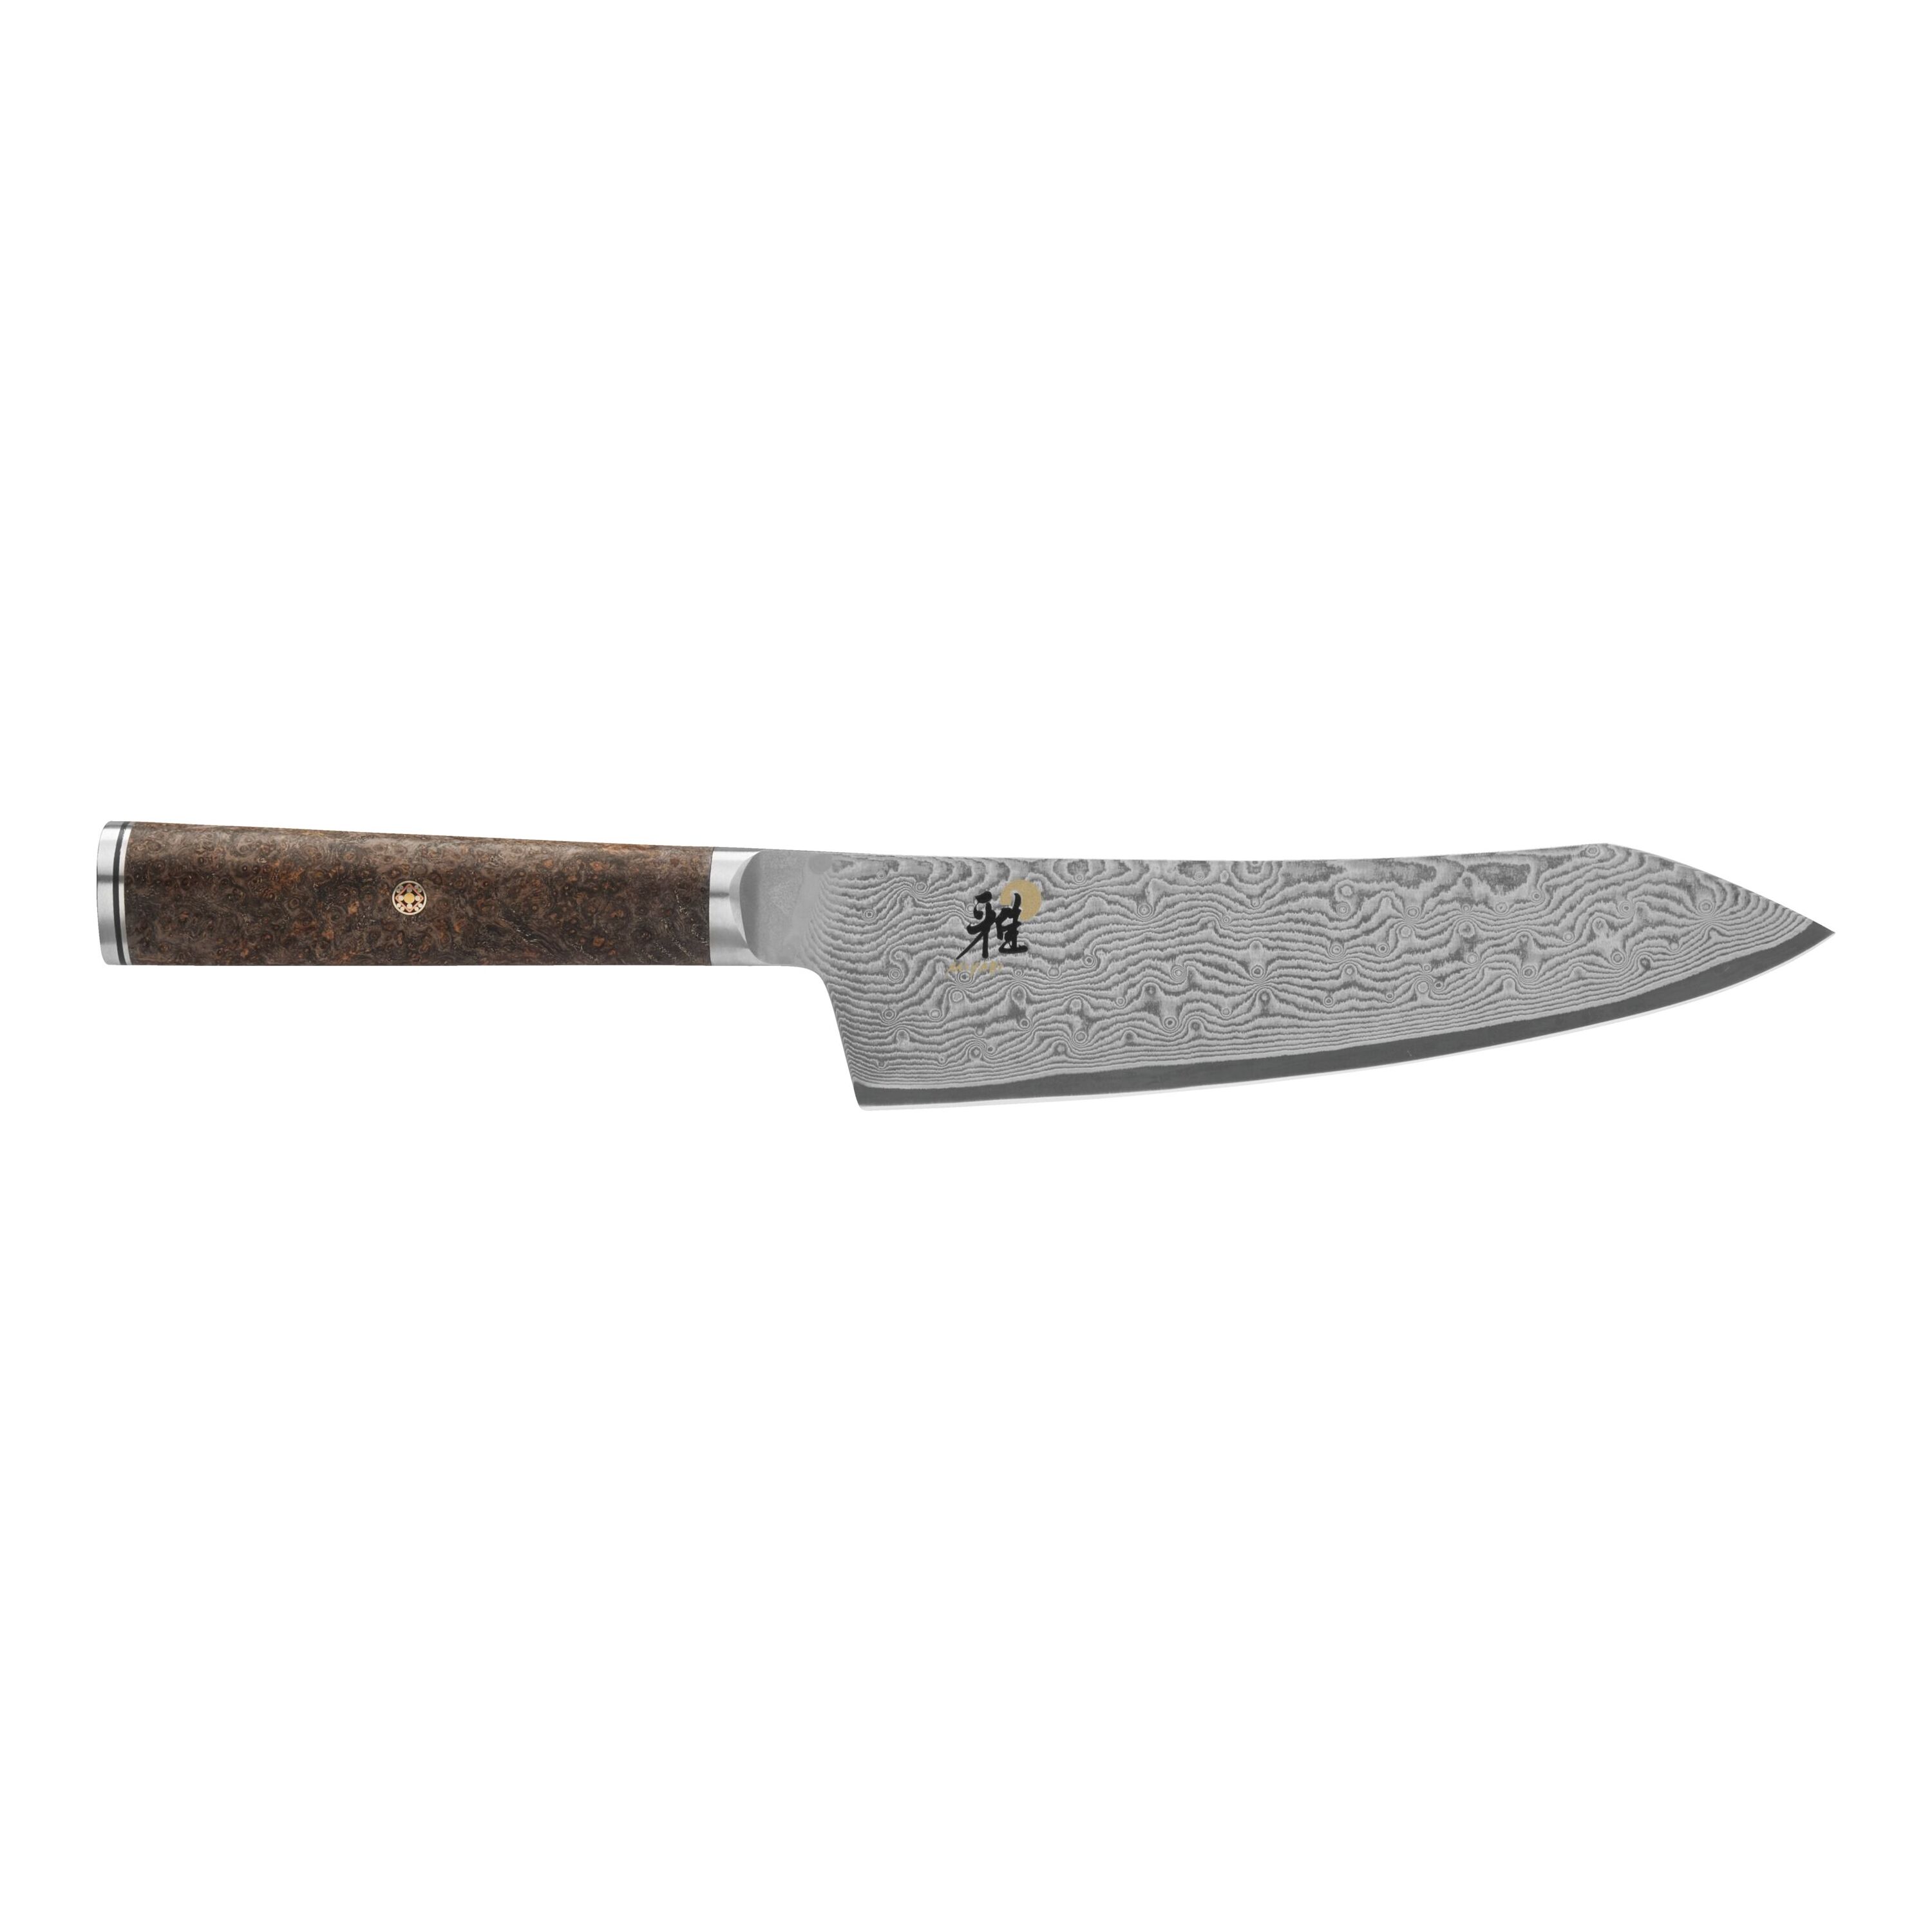 KitchenAid Gourmet Forged Santoku Knife, 7-Inch, Black